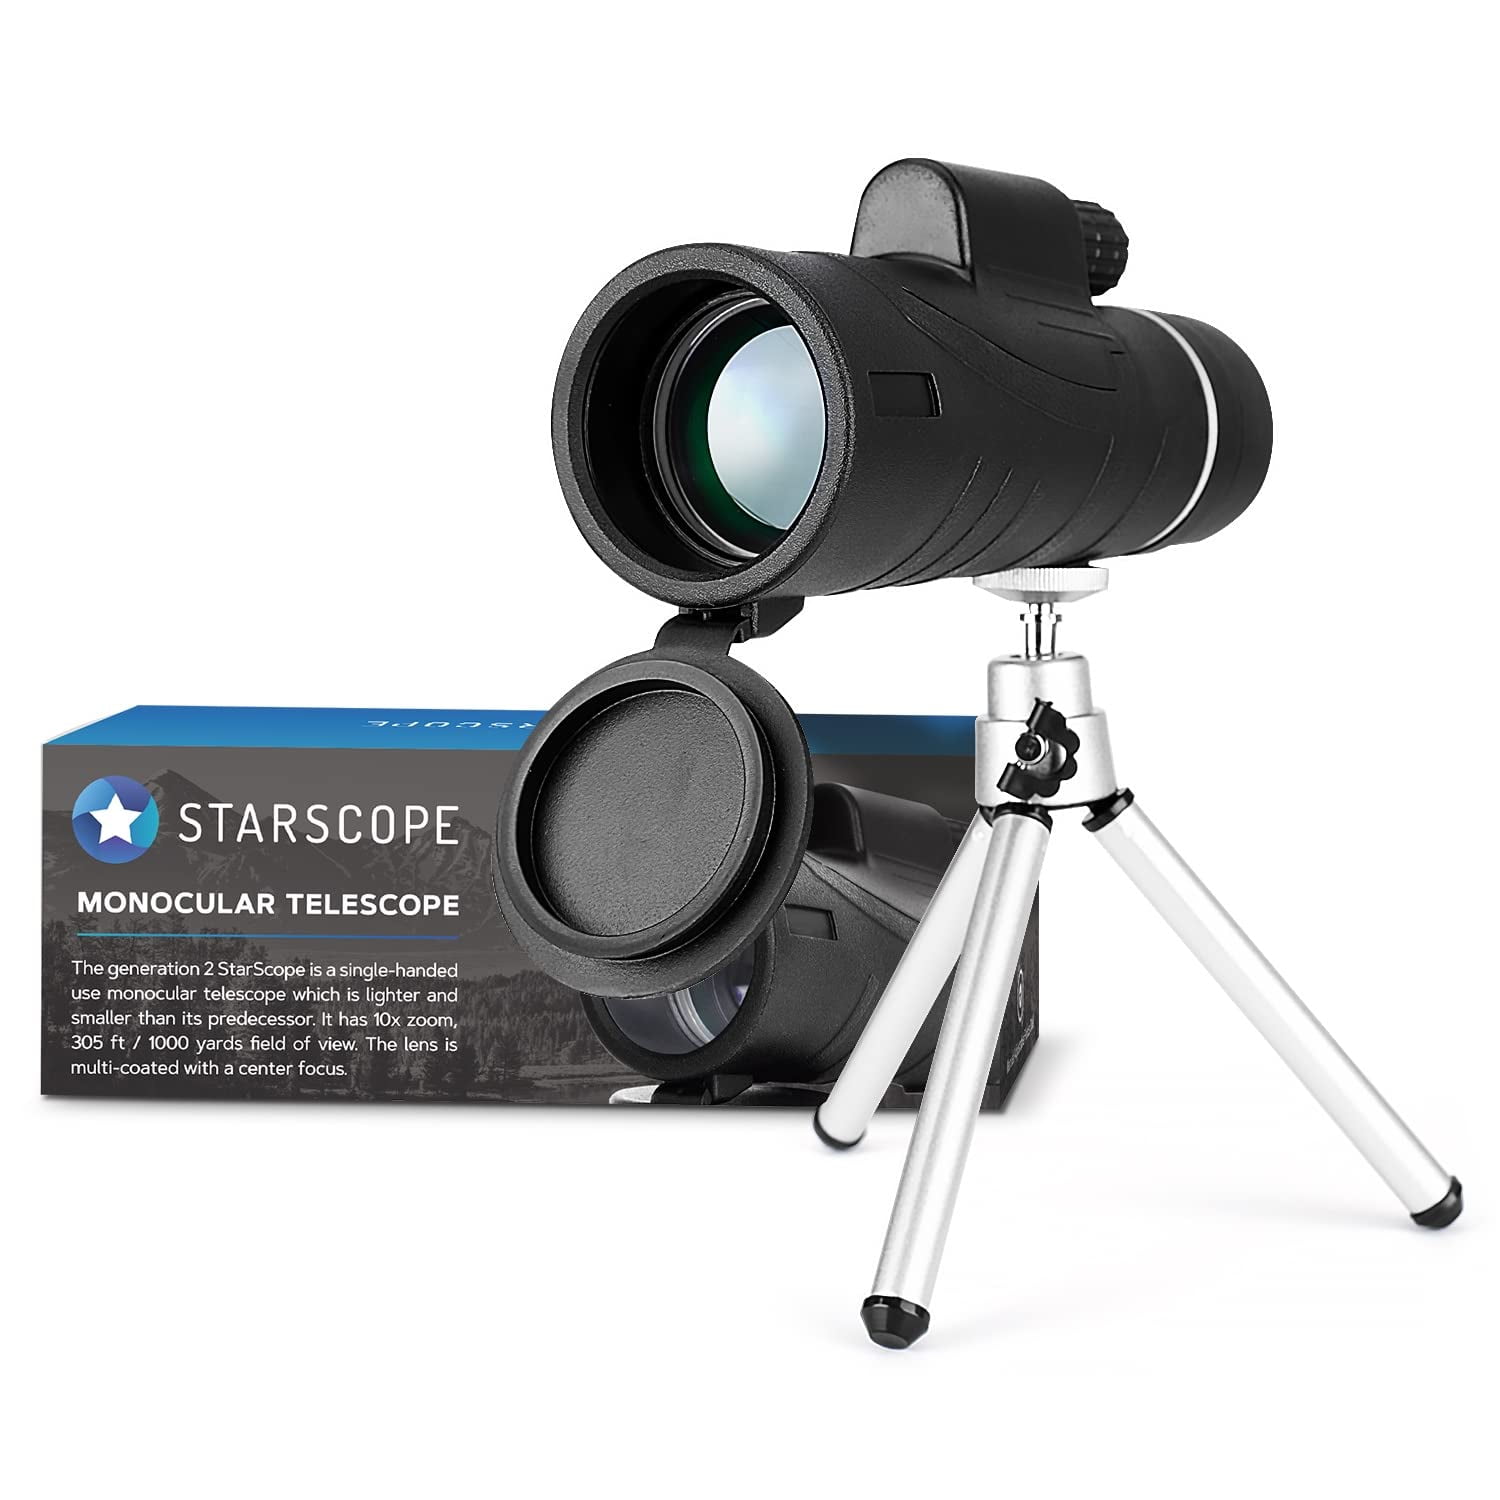 Monocular Telescope-40x60 High Powered Monocular Scope with Smartphone Adapter and Tripod BAK4 Prism FMC Lens Night Vision monocular Starscope 